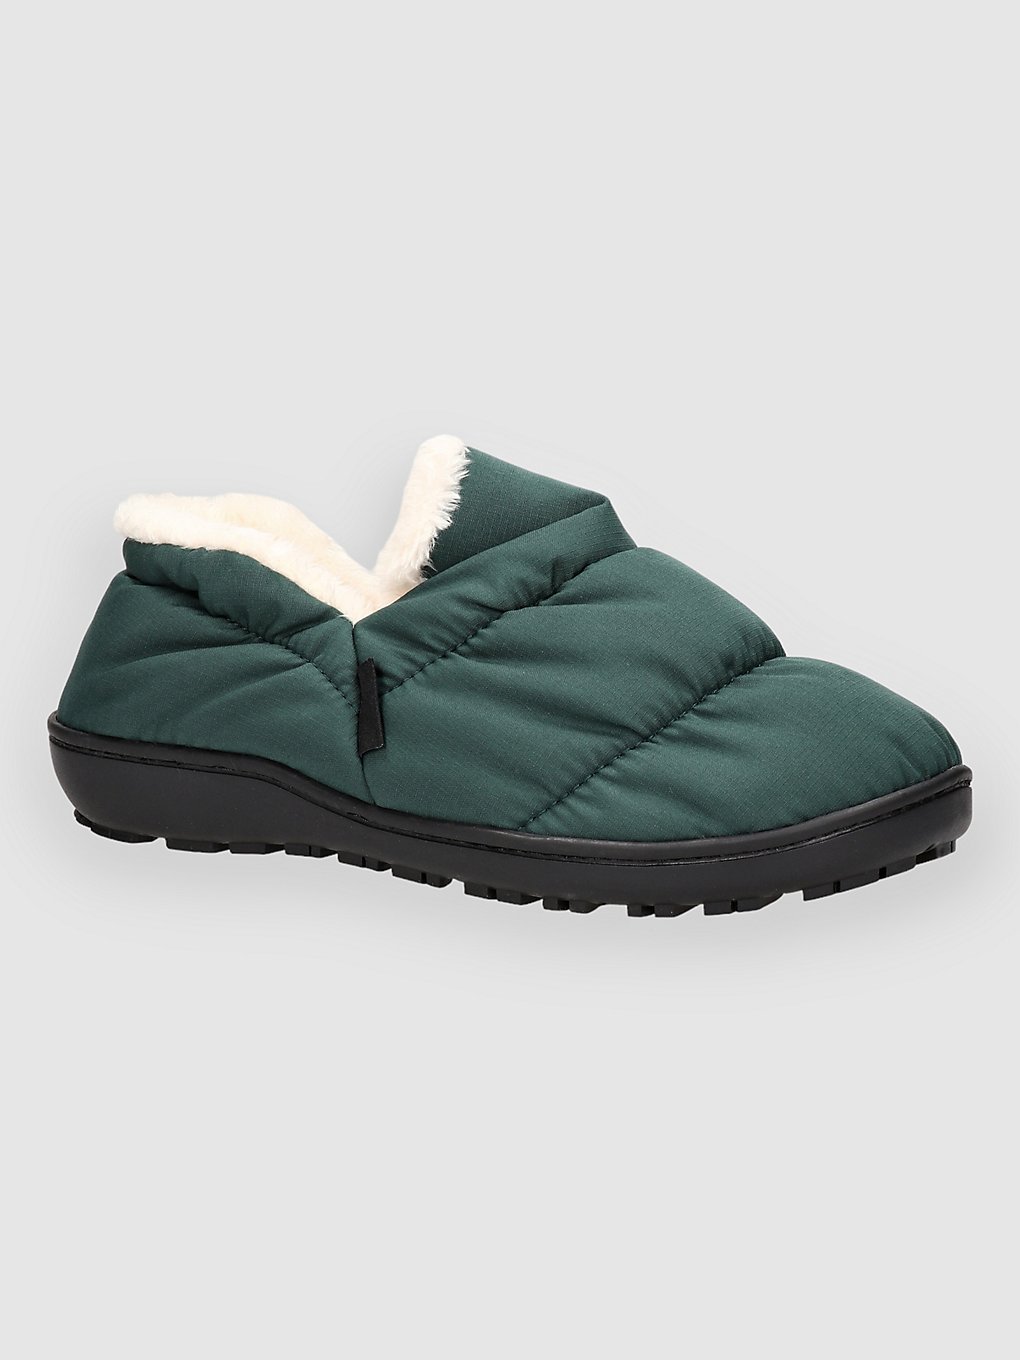 Voited Cloudtouch slippersWinter Winter schoenen groen